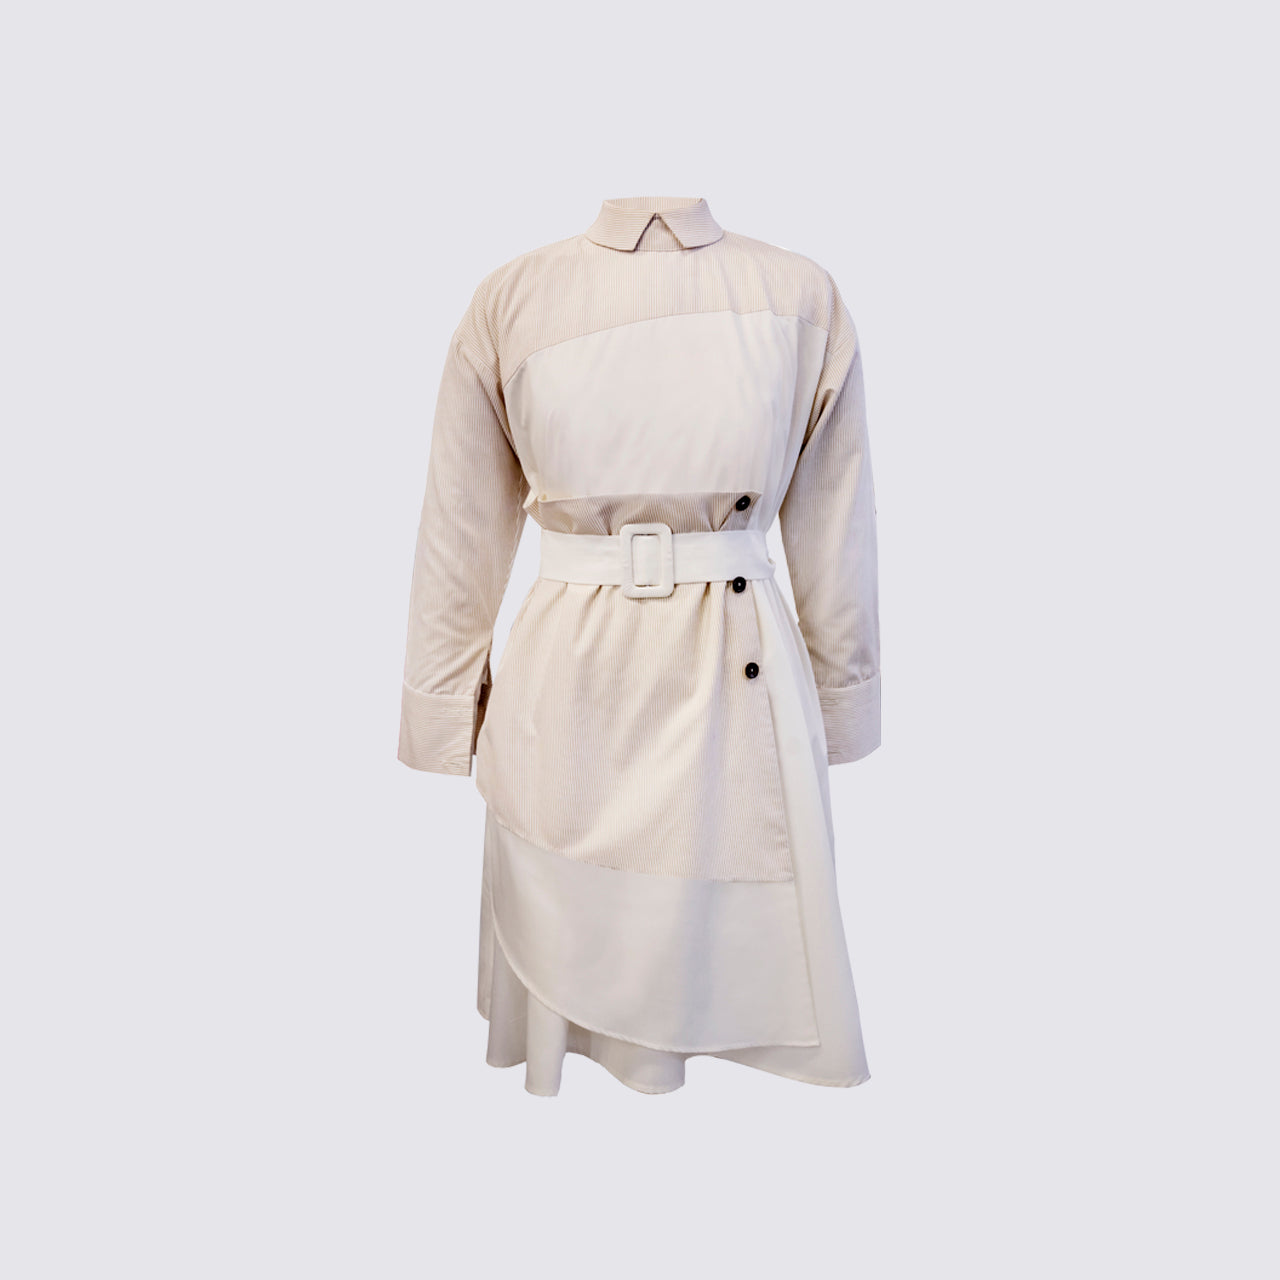 Frankfort Street - Off White Mini Dress